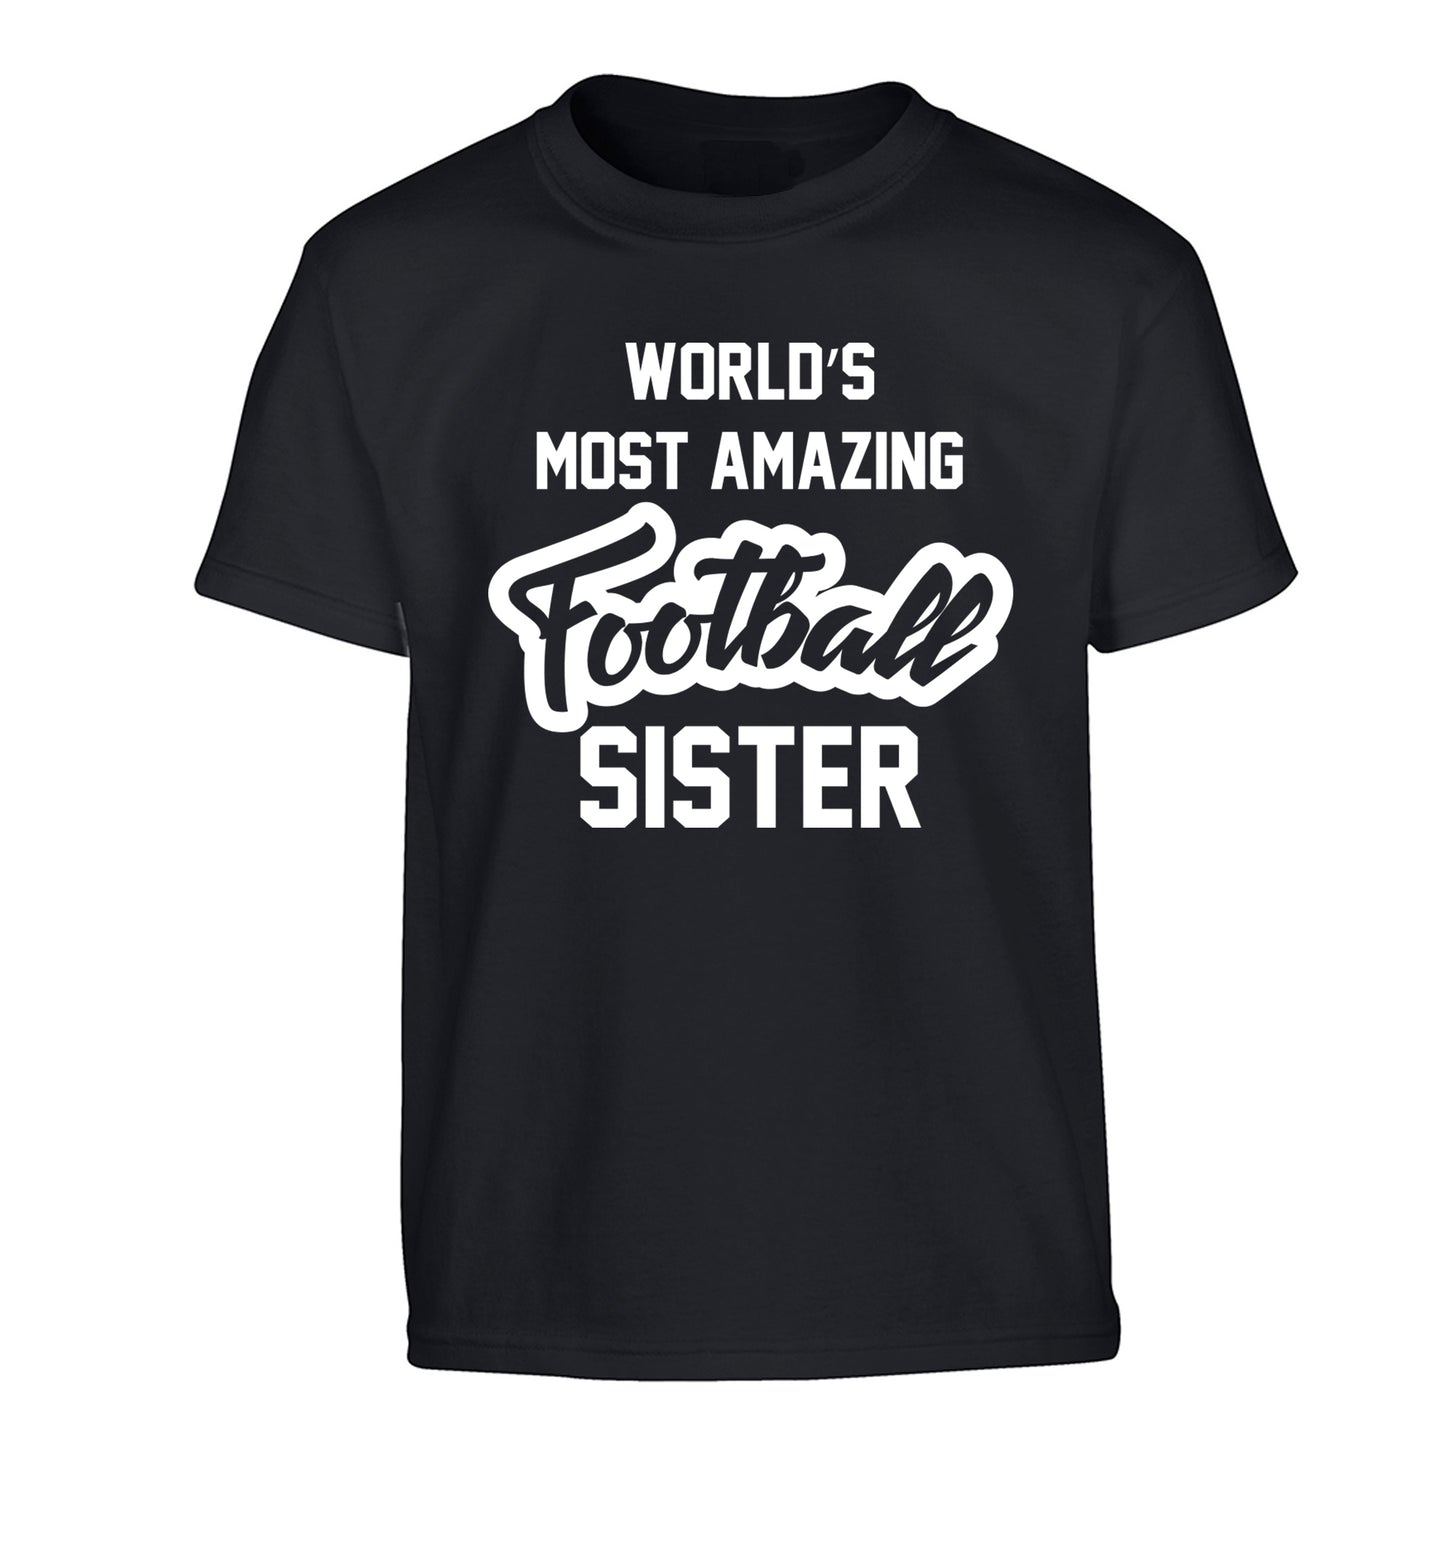 Worlds most amazing football sister Children's black Tshirt 12-14 Years